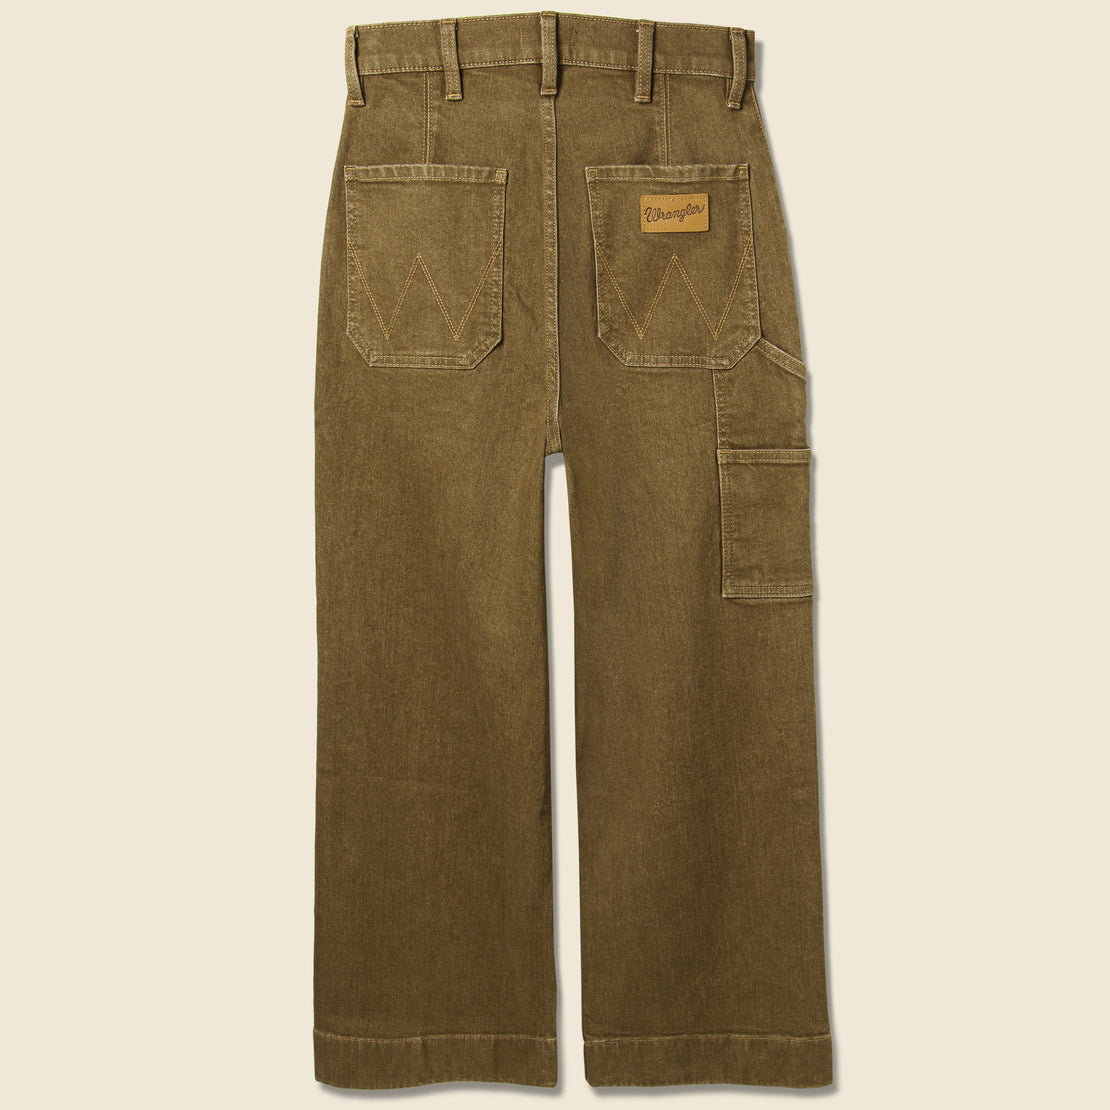 Wide Leg Utility Crop Jean - Falcon Brown - Wrangler - STAG Provisions - W - Pants - Denim